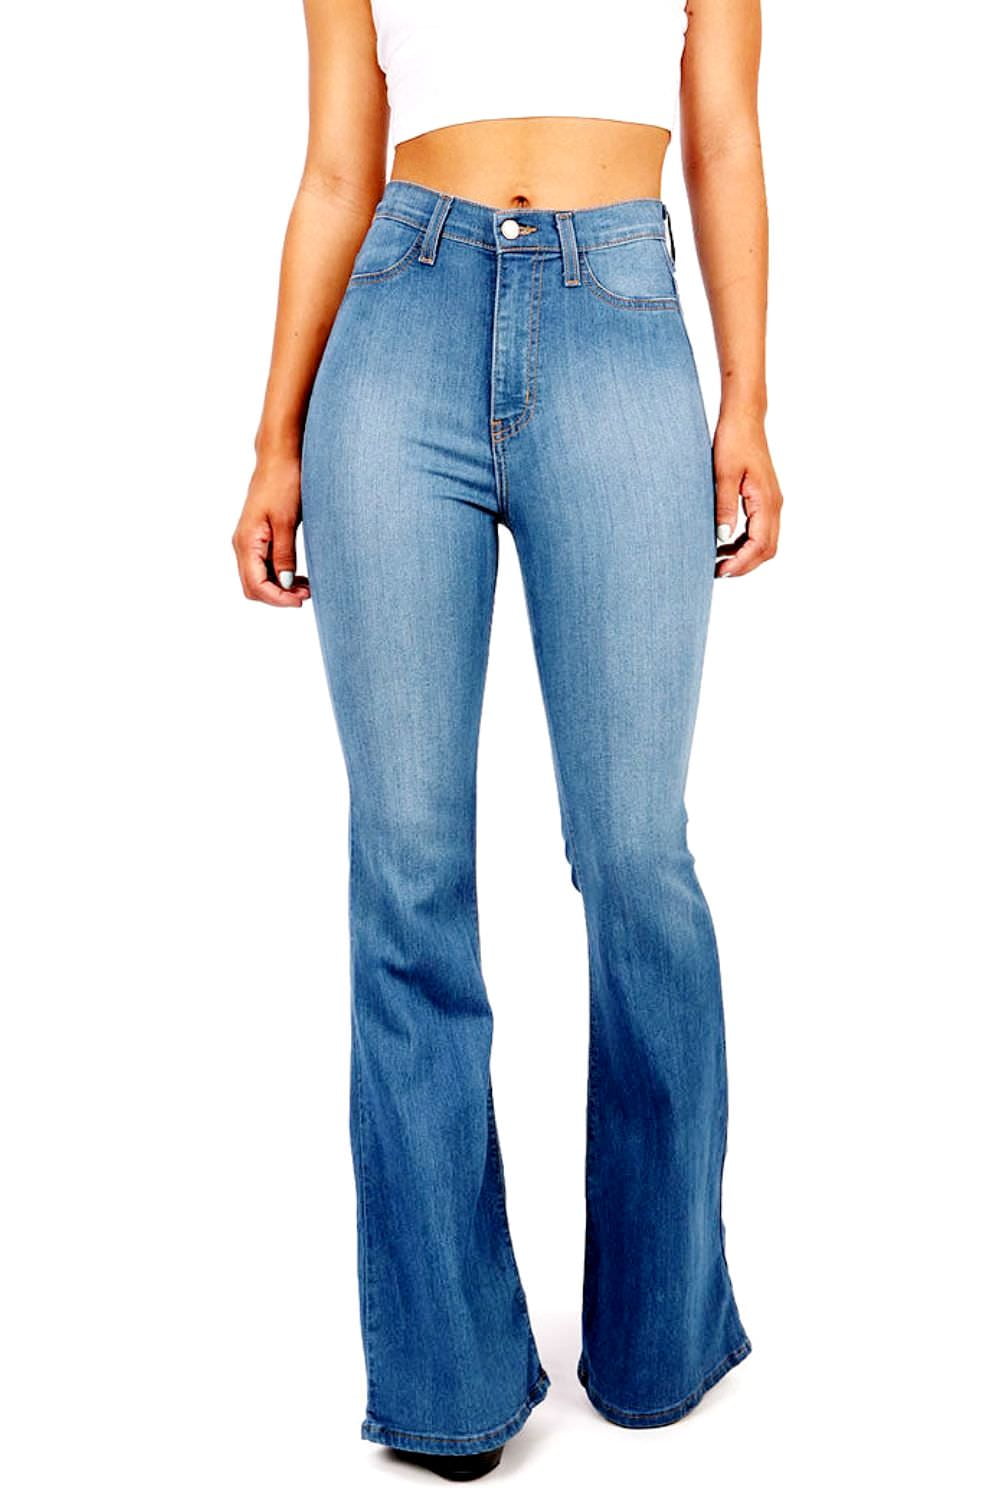 Women's Vintage Denim Jeans High Waist Stretch Skinny Slim Flared Trousers Pant 